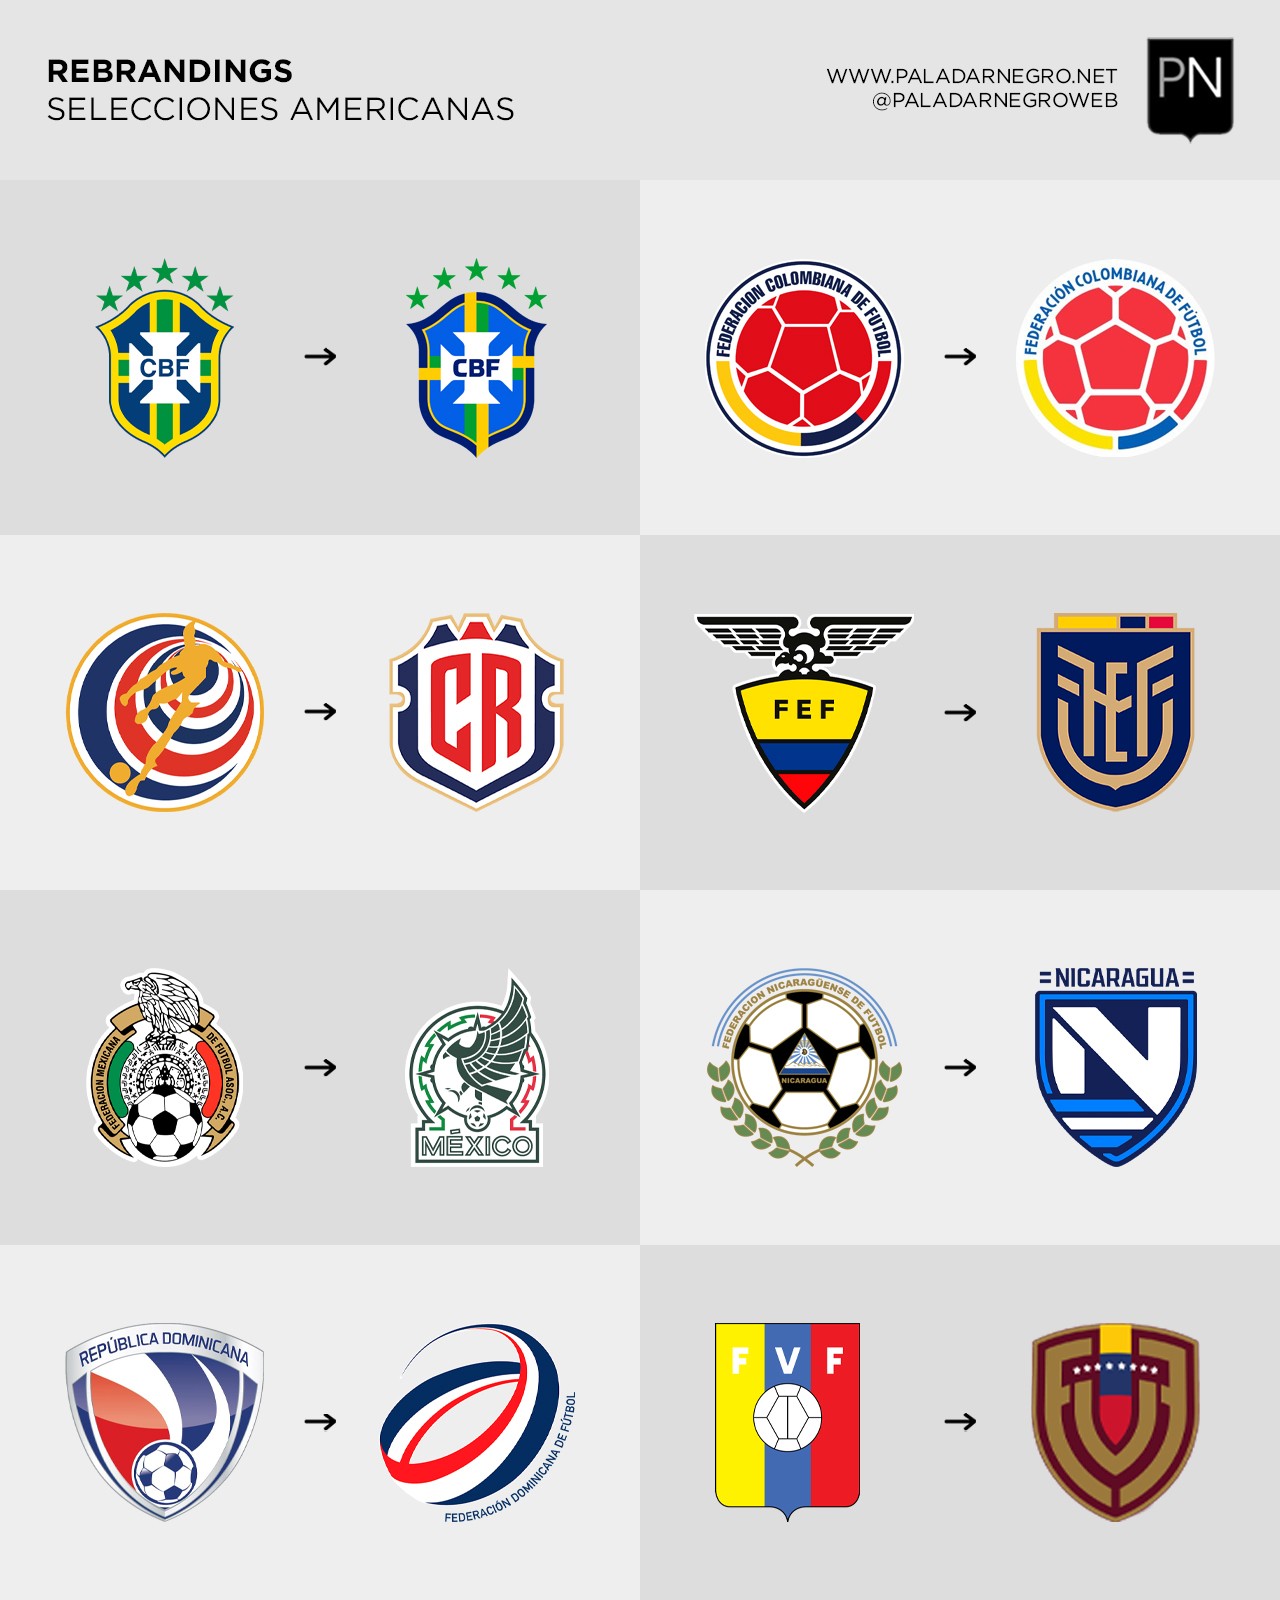 Is FIFA 2014 Logo Prestigious Enough?